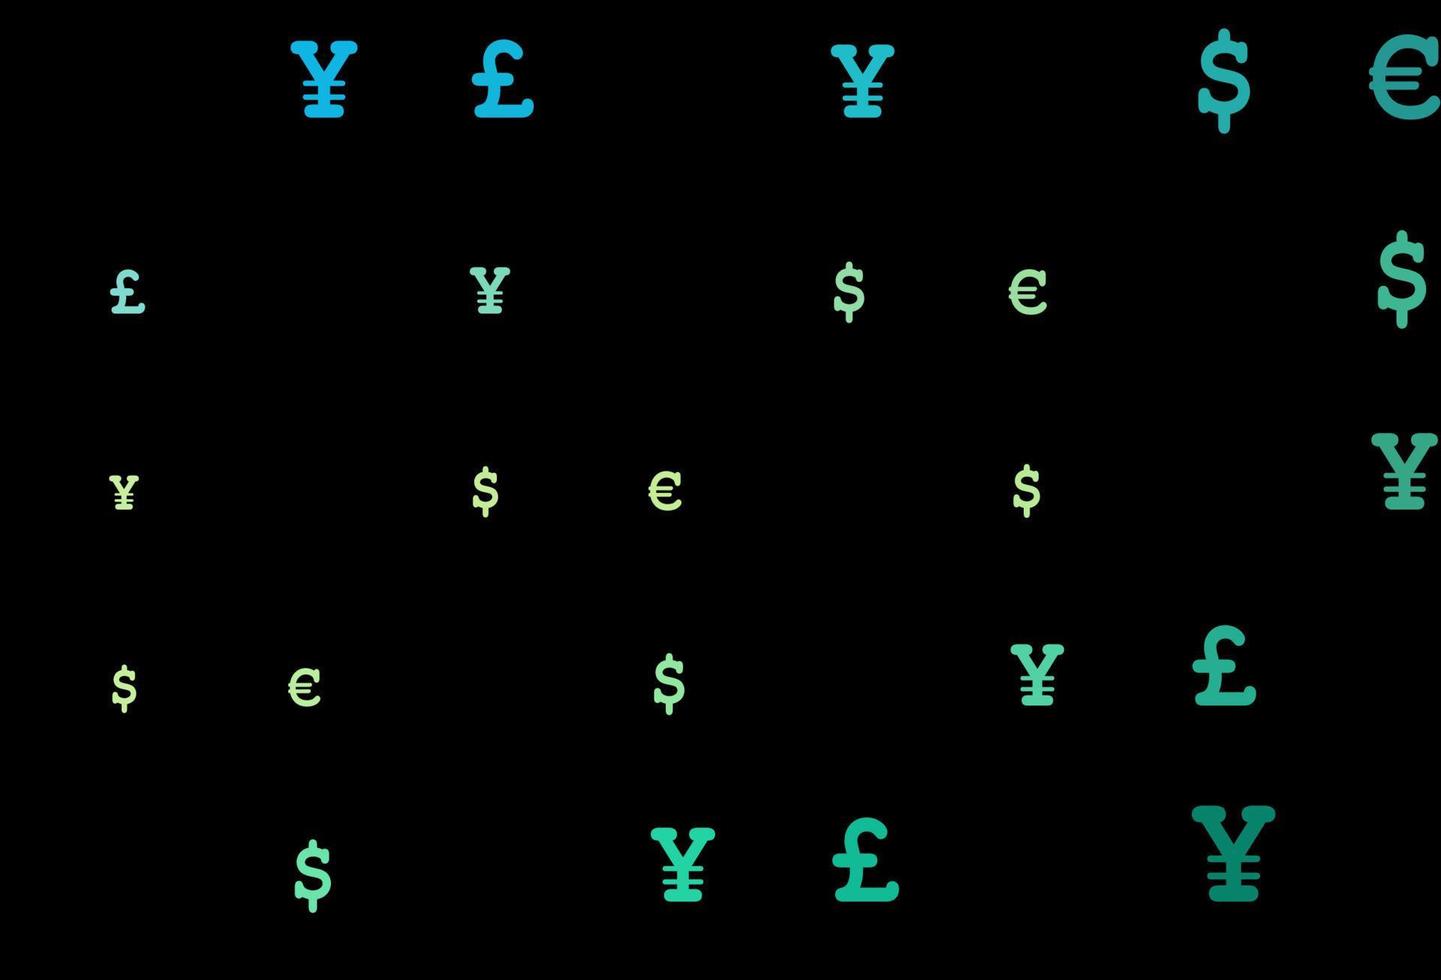 layout de vetor verde escuro, amarelo com símbolos bancários.